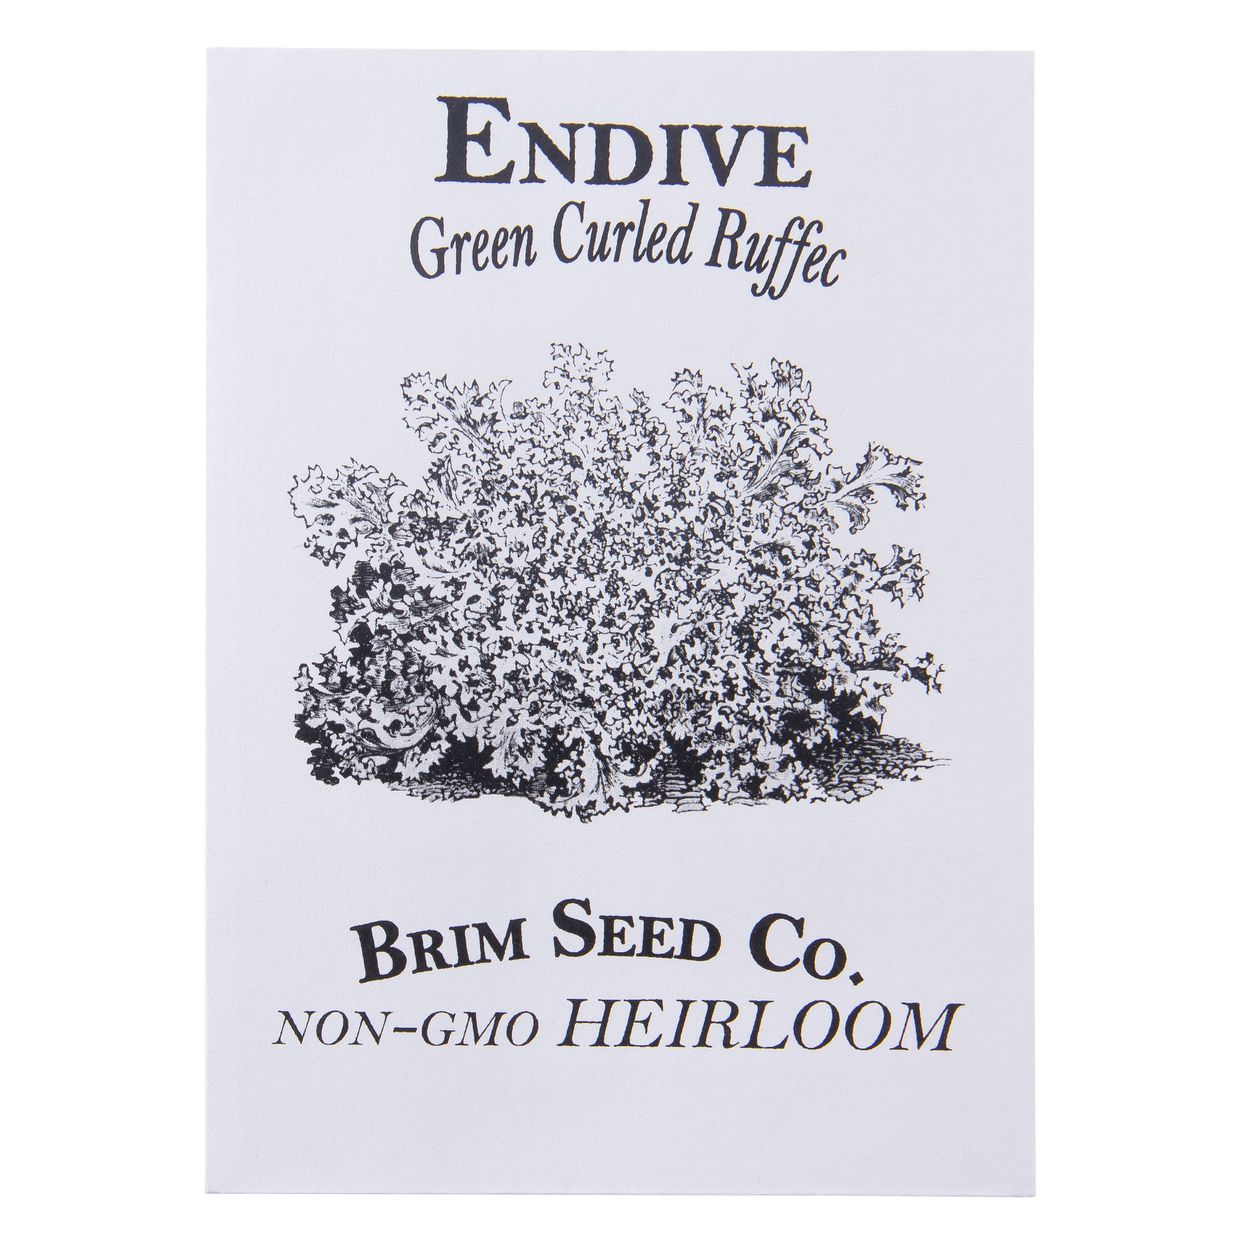 Brim Seed Co. - Green Curled Ruffich Endive Heirloom Seed